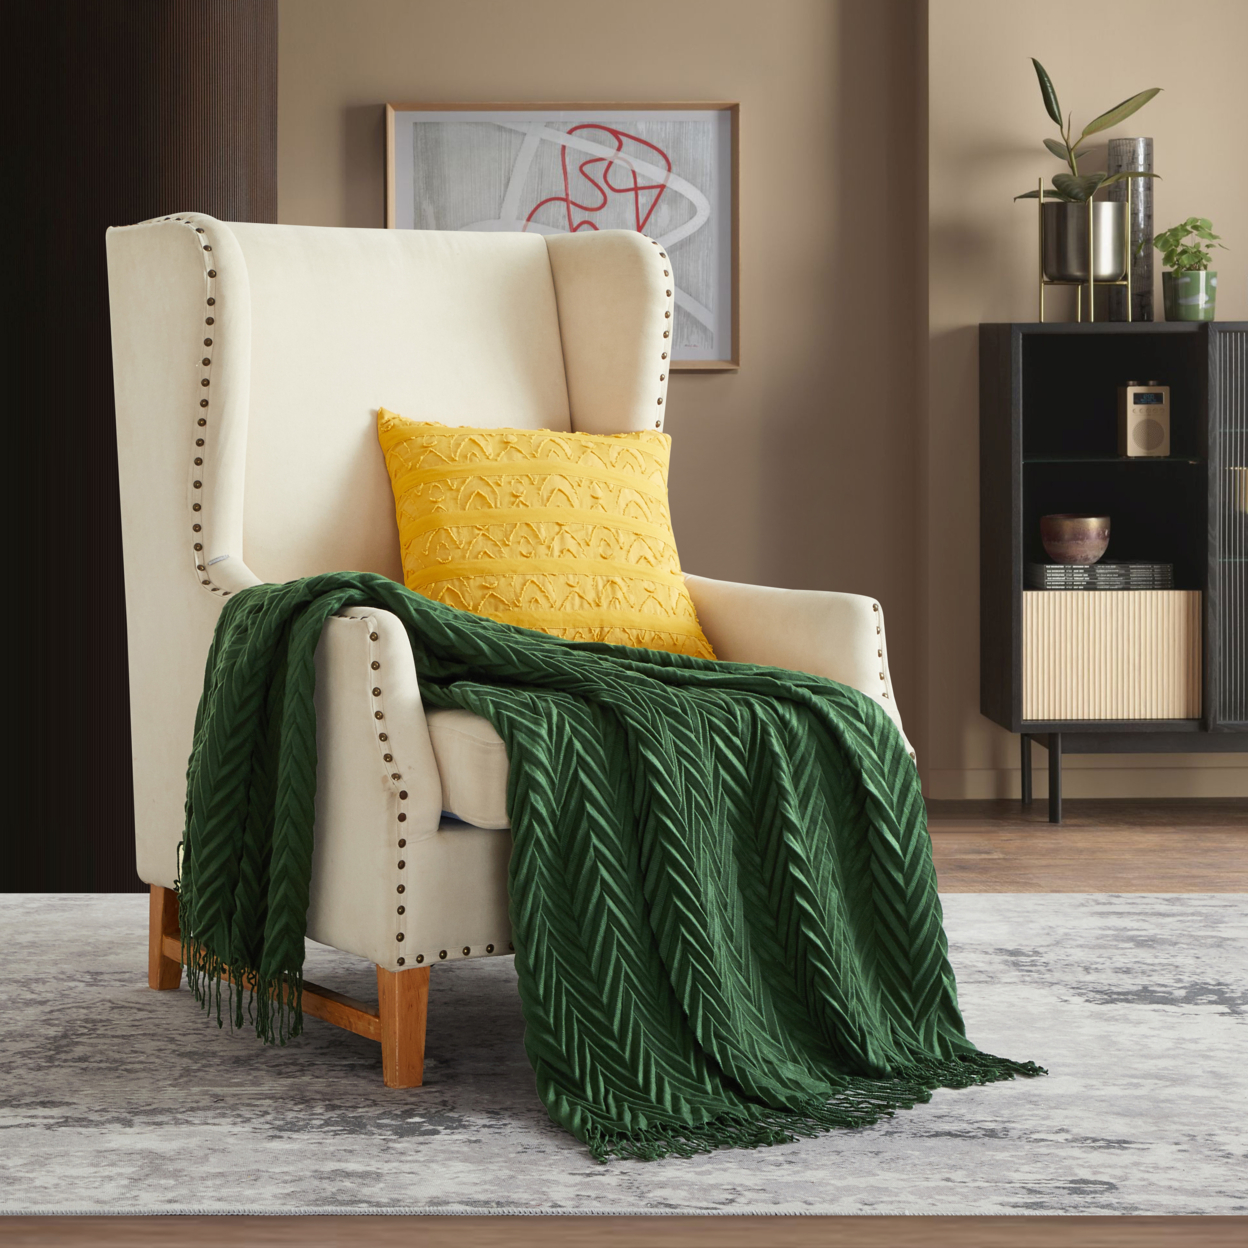 NY&C Home Doremost Zig-zag Pattern With Tassel Fringe Throw Blanket - Green